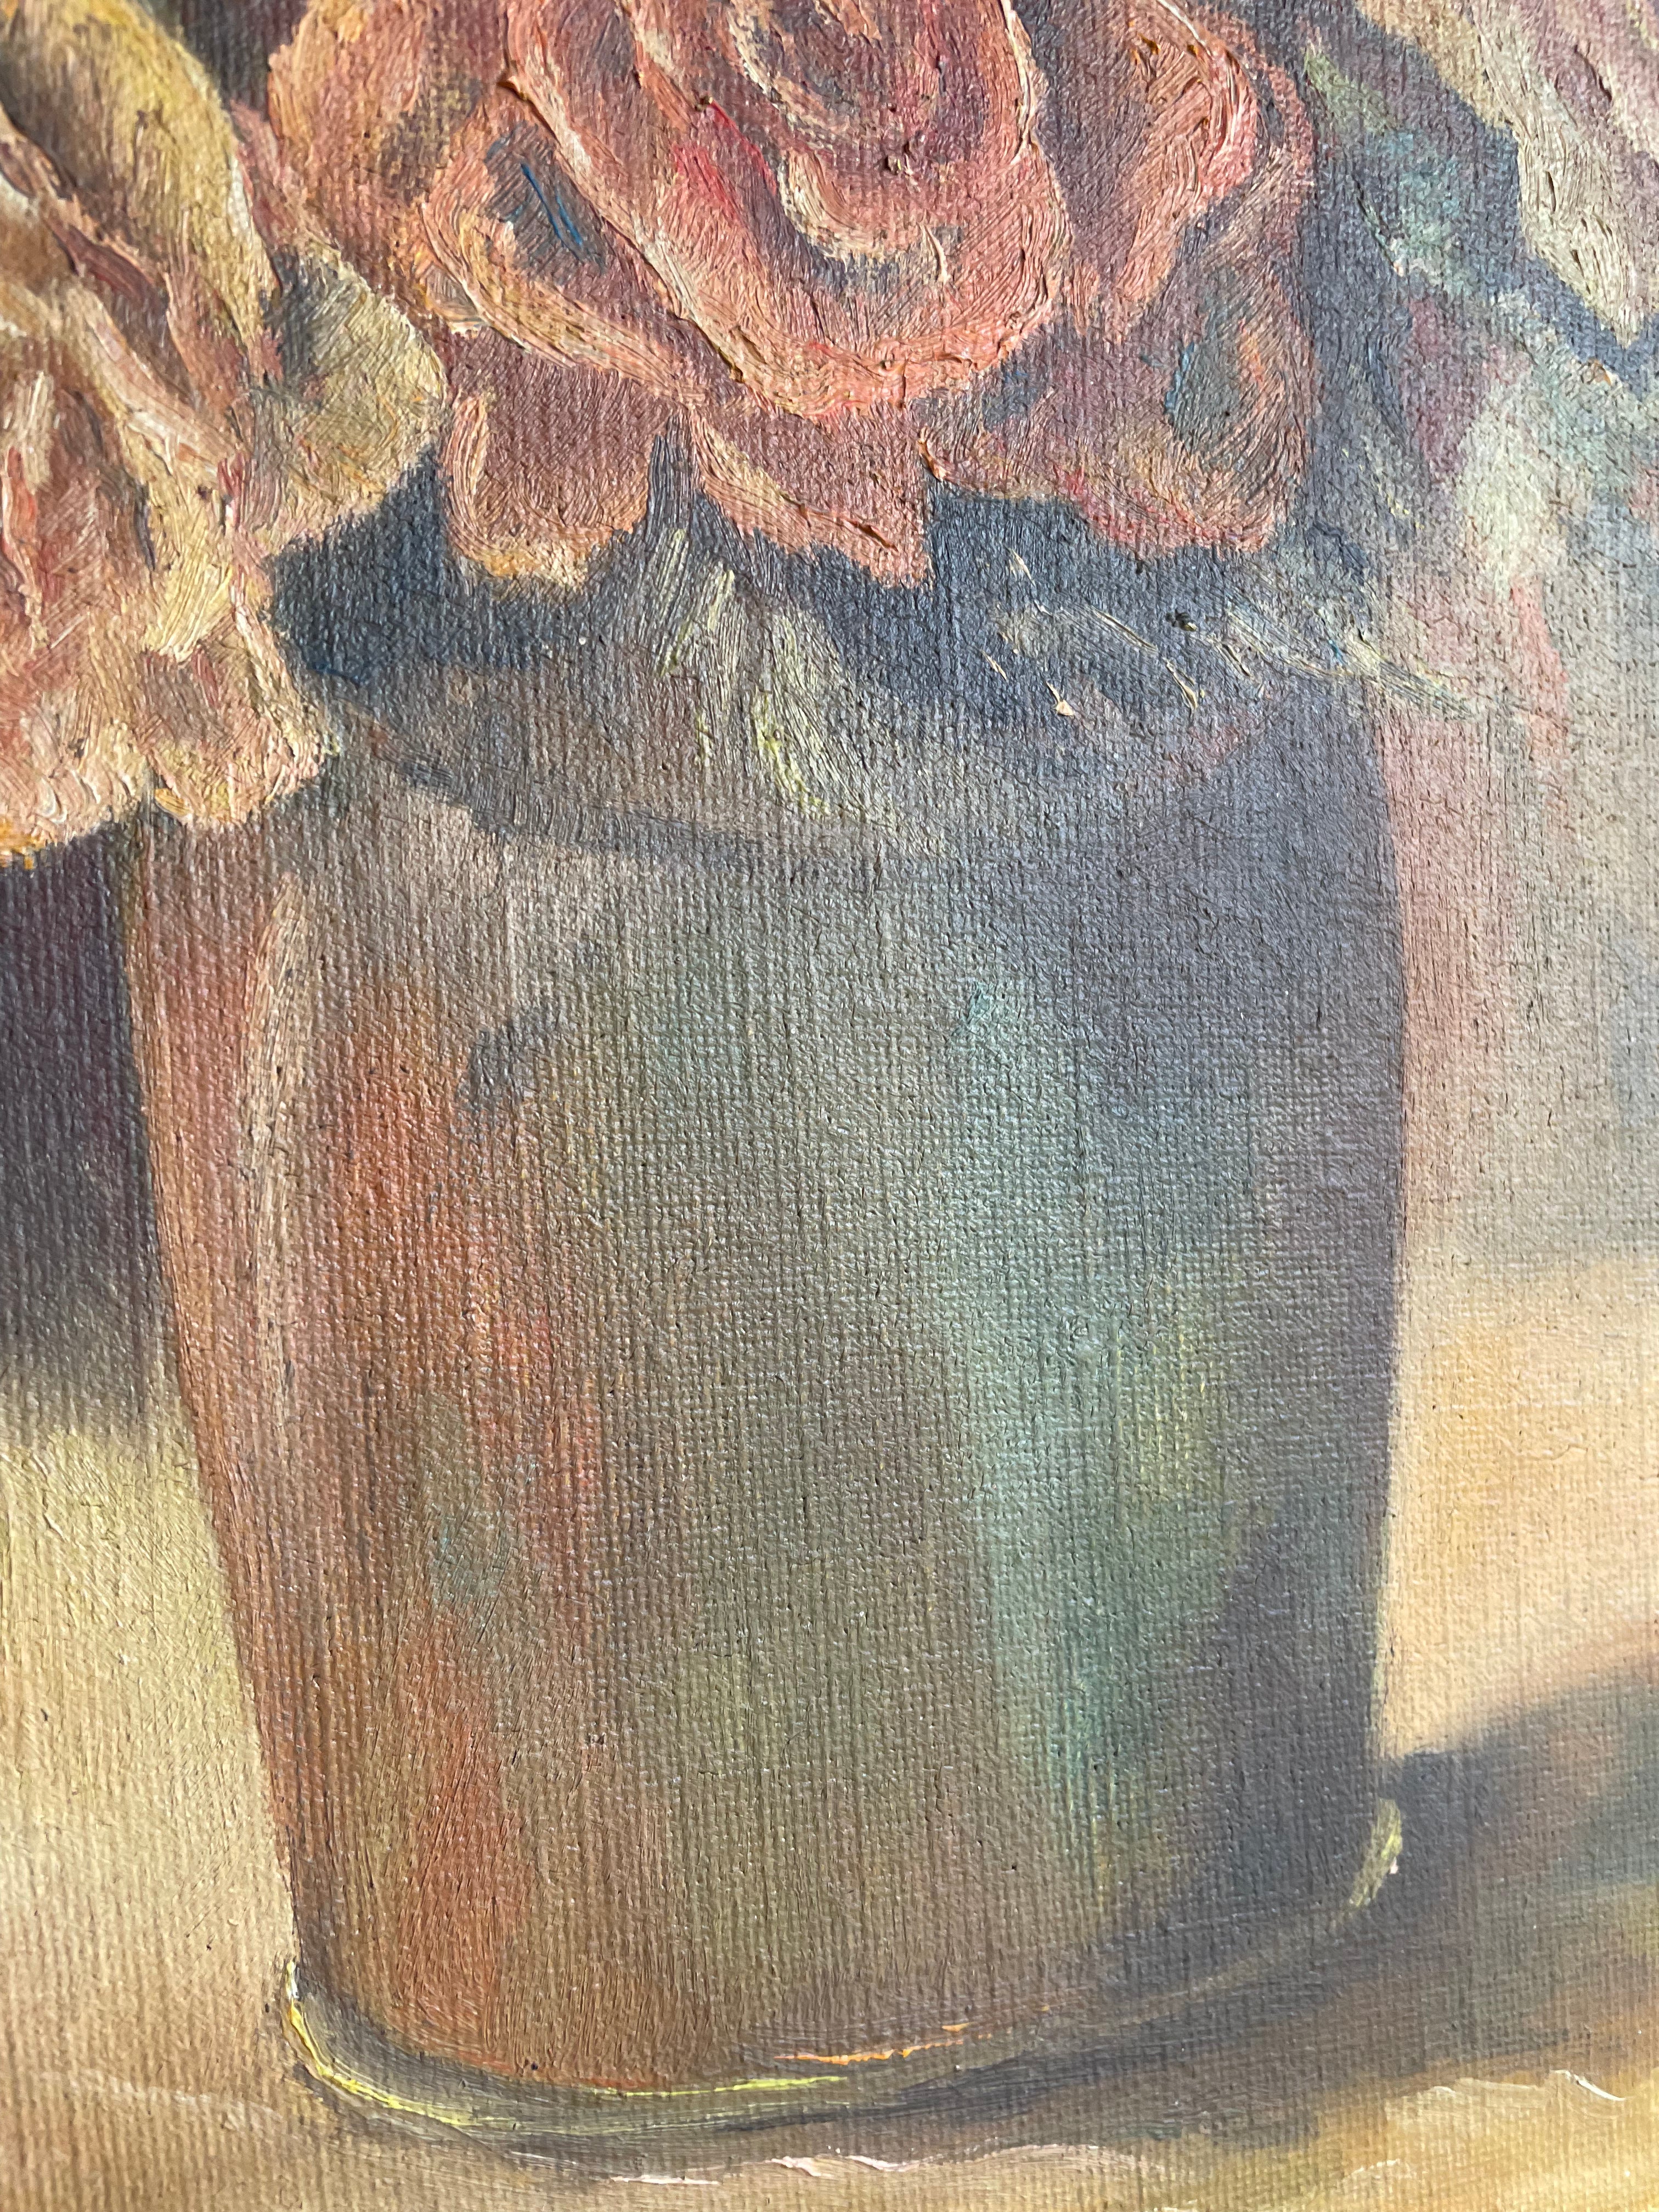 Floral Still Life: Oil on Canvas